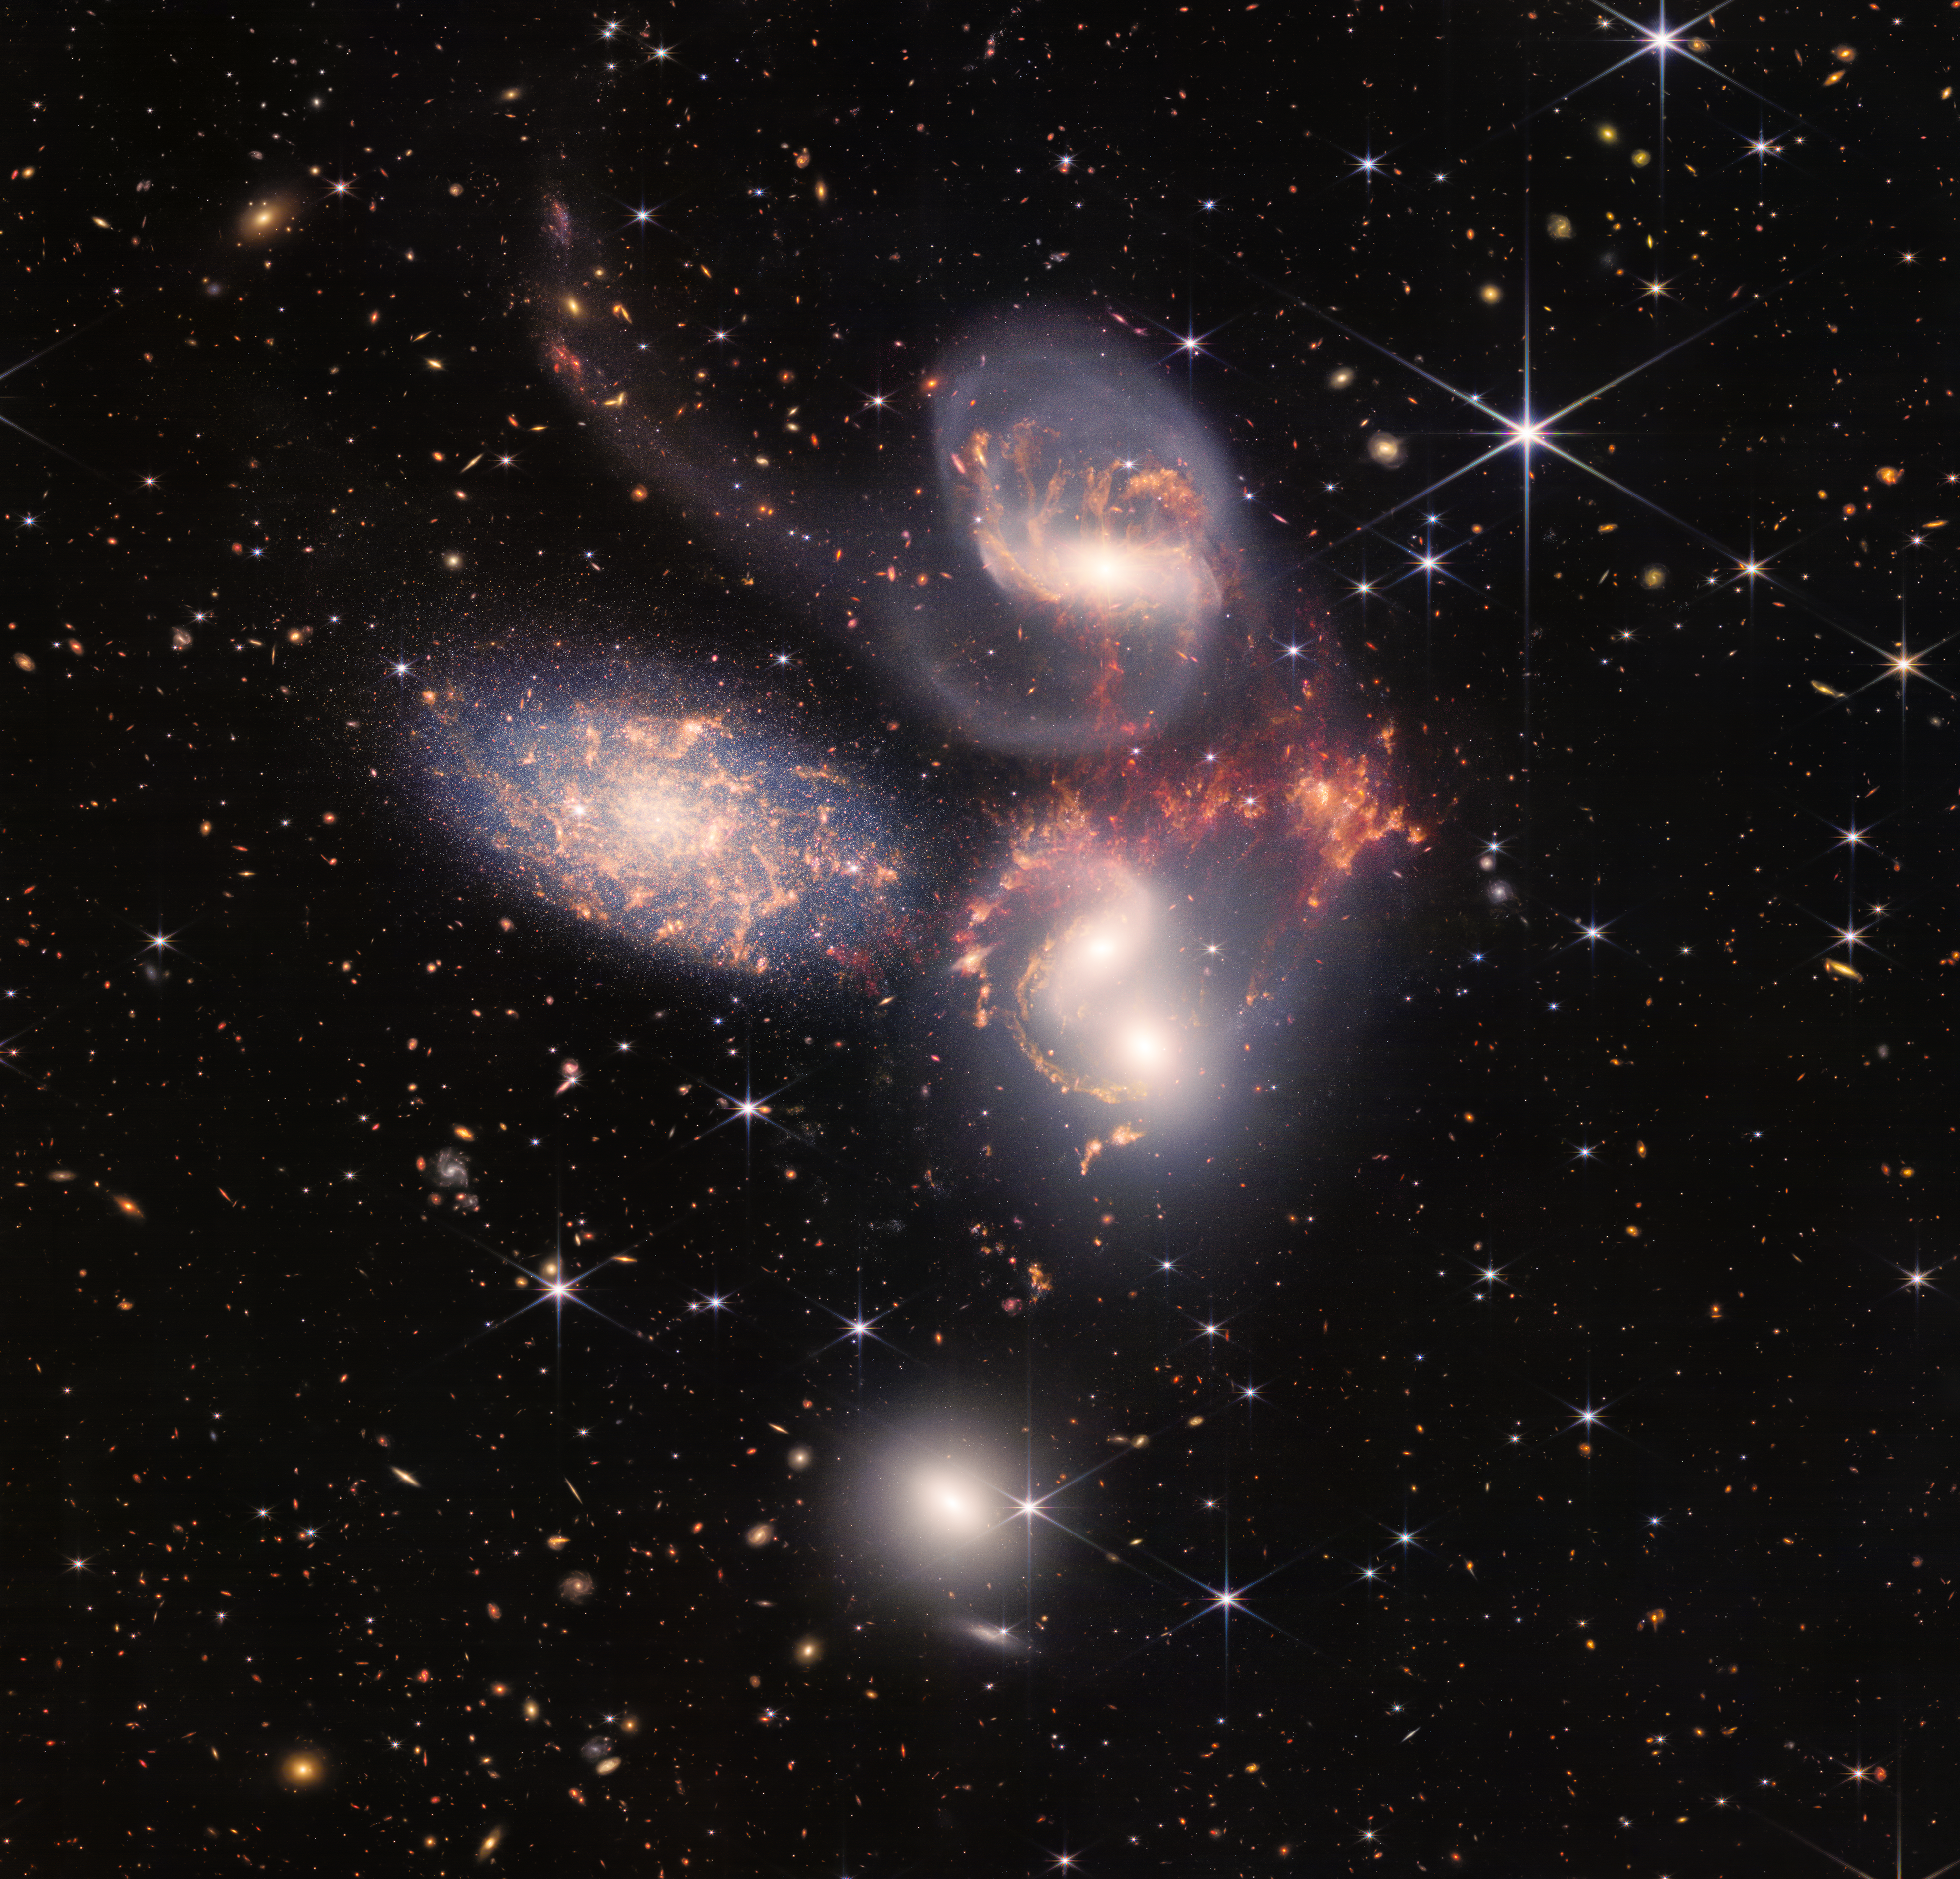 James Webb Space Telescope Space Stars Galaxy Stephans Quintet NGC 7318B 3960x3796